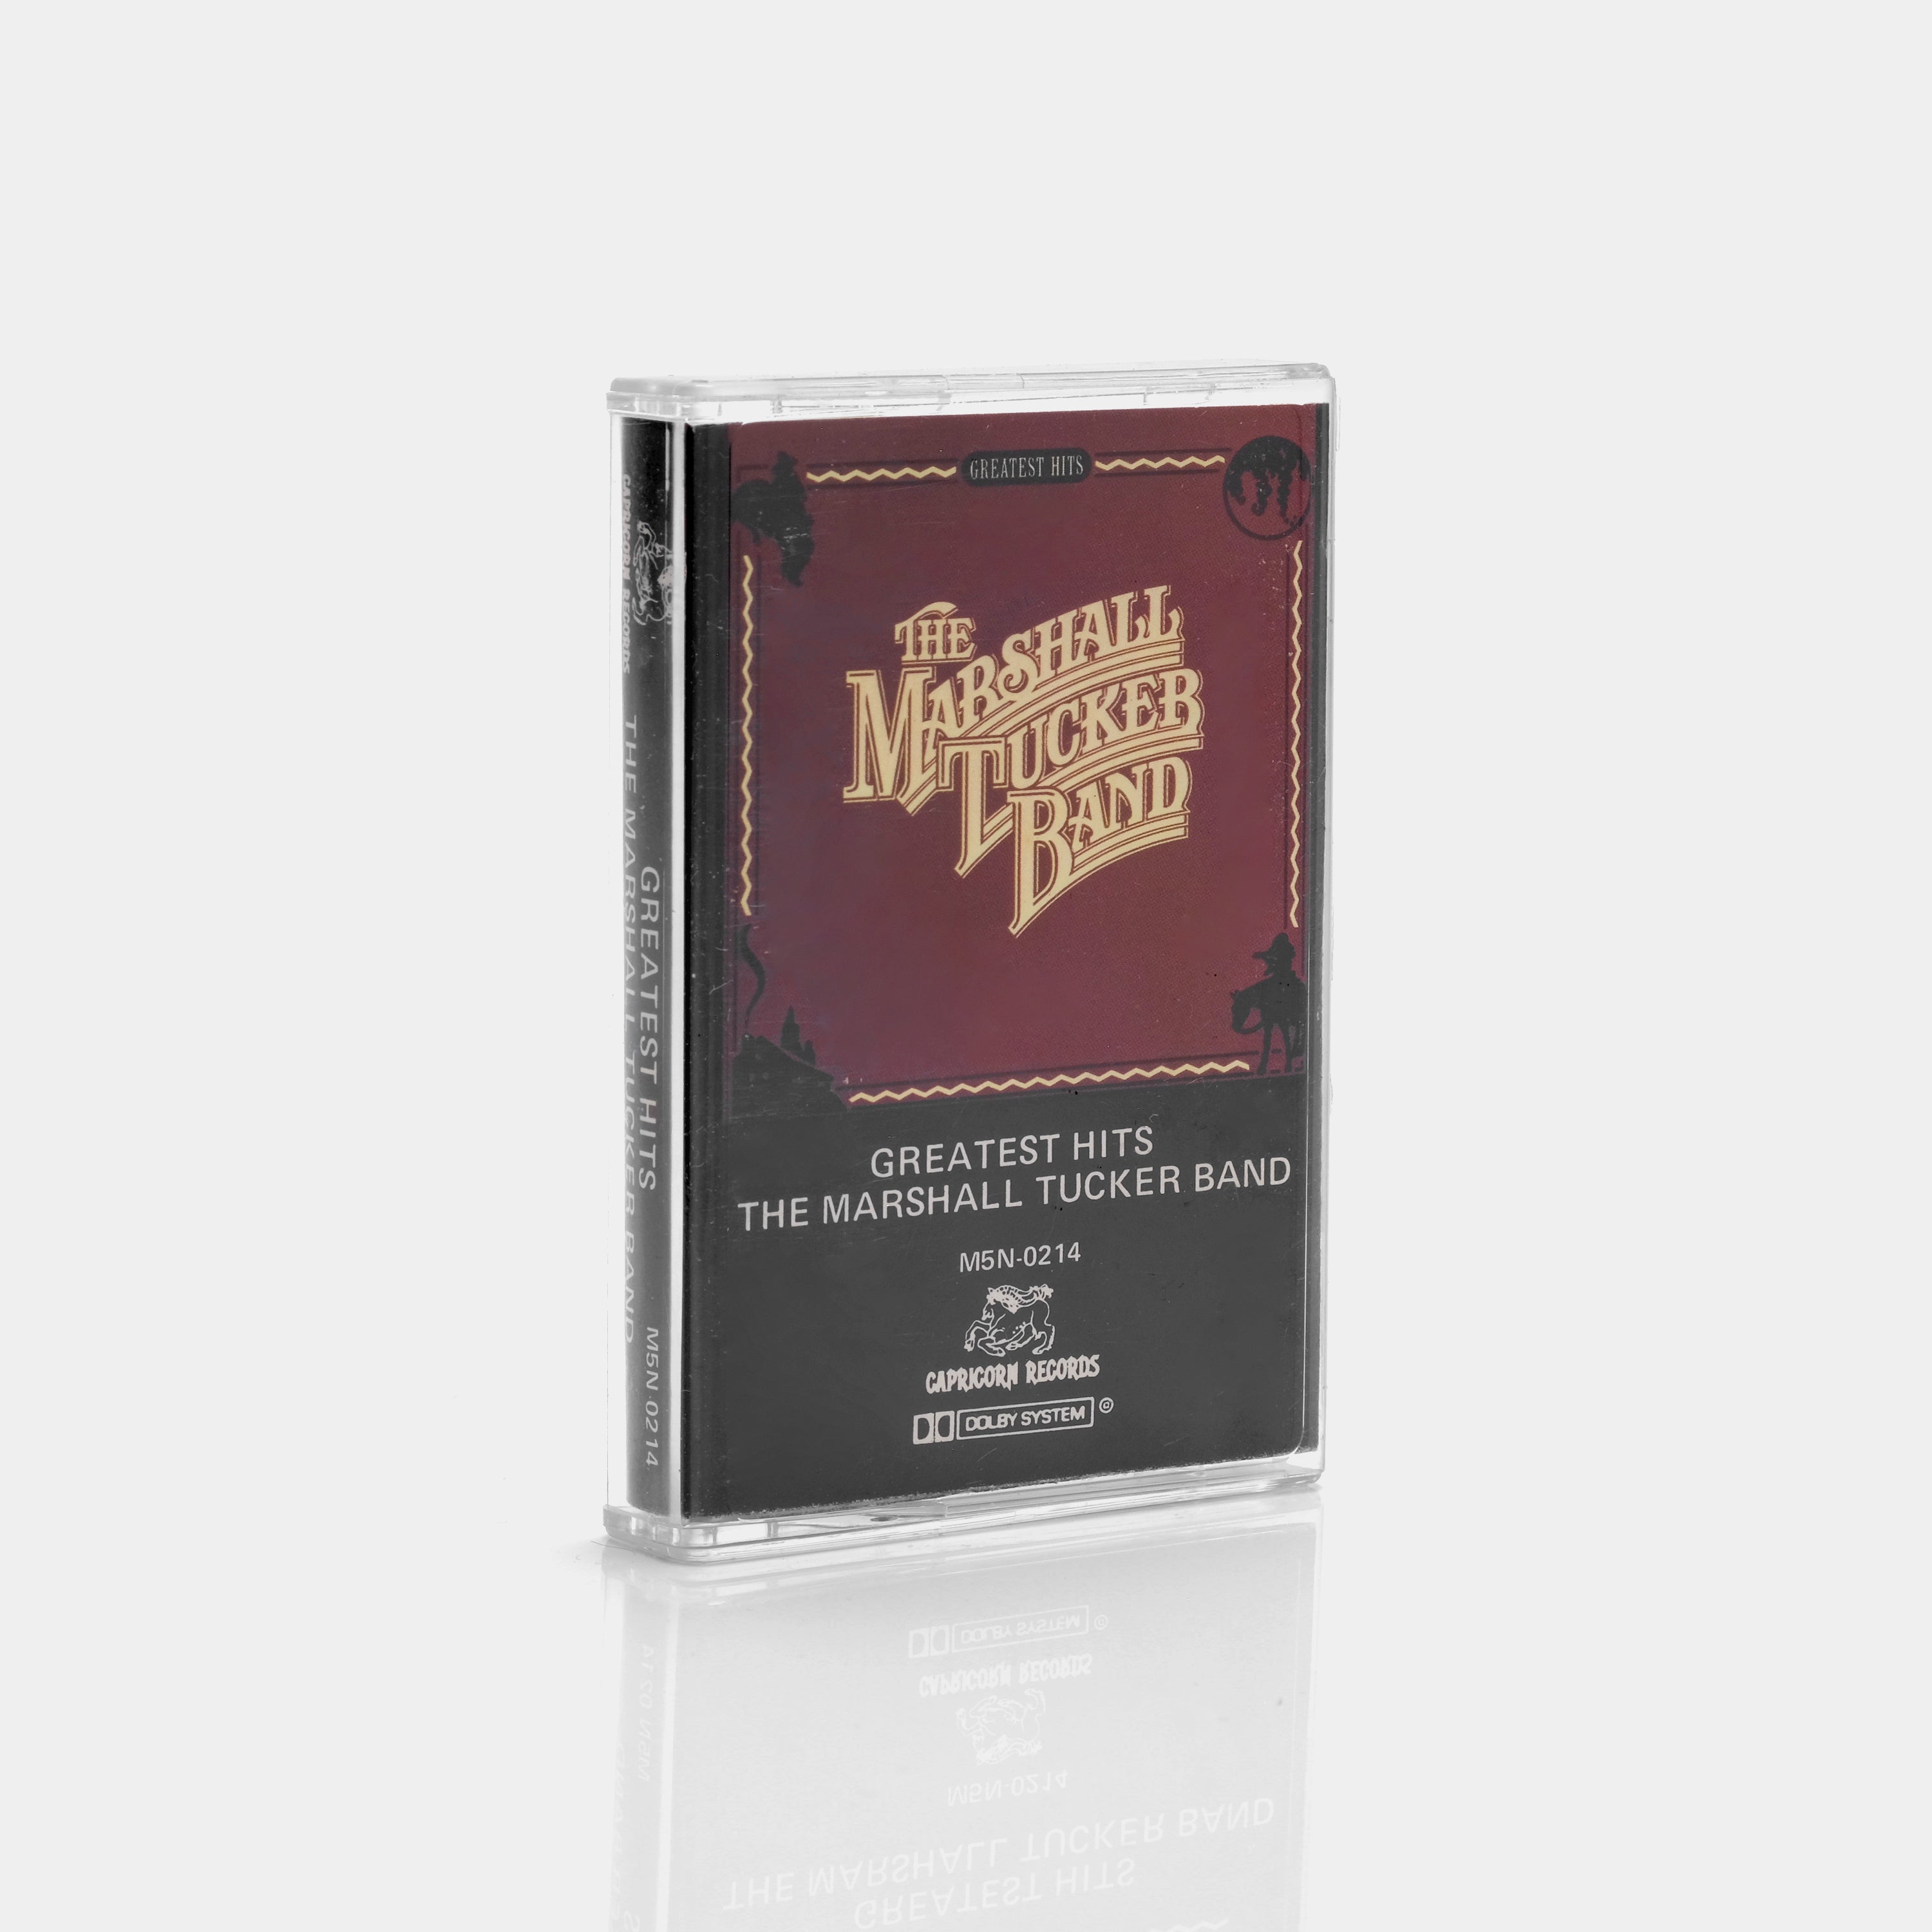 The Marshall Tucker Band - Greatest Hits Cassette Tape